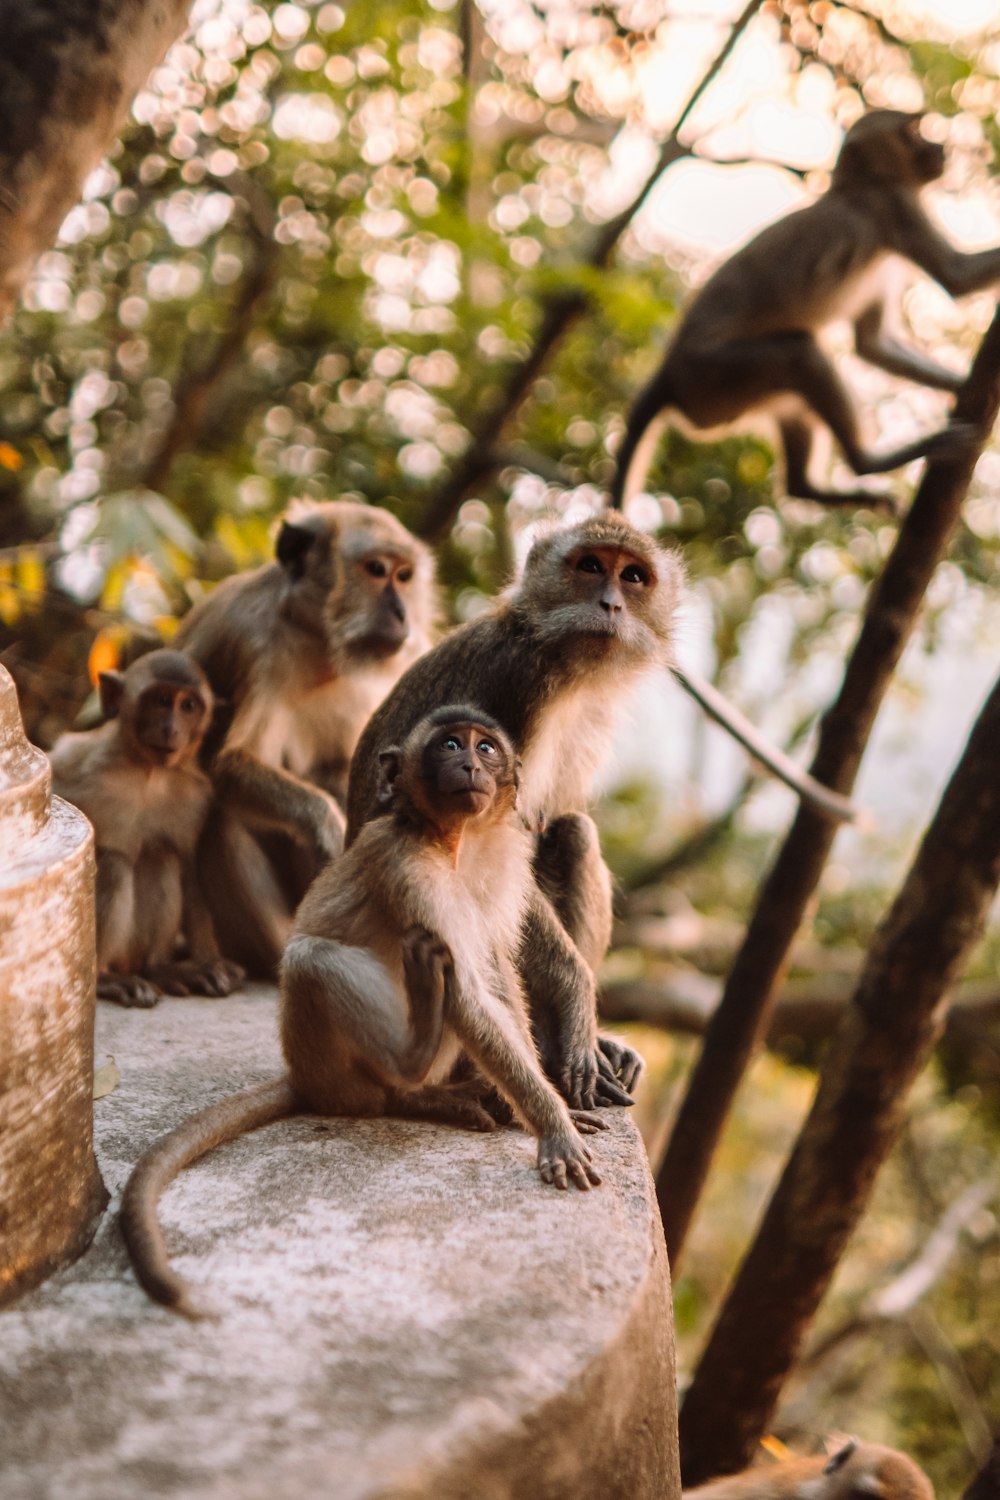 a group of monkeys sitting on a ledge